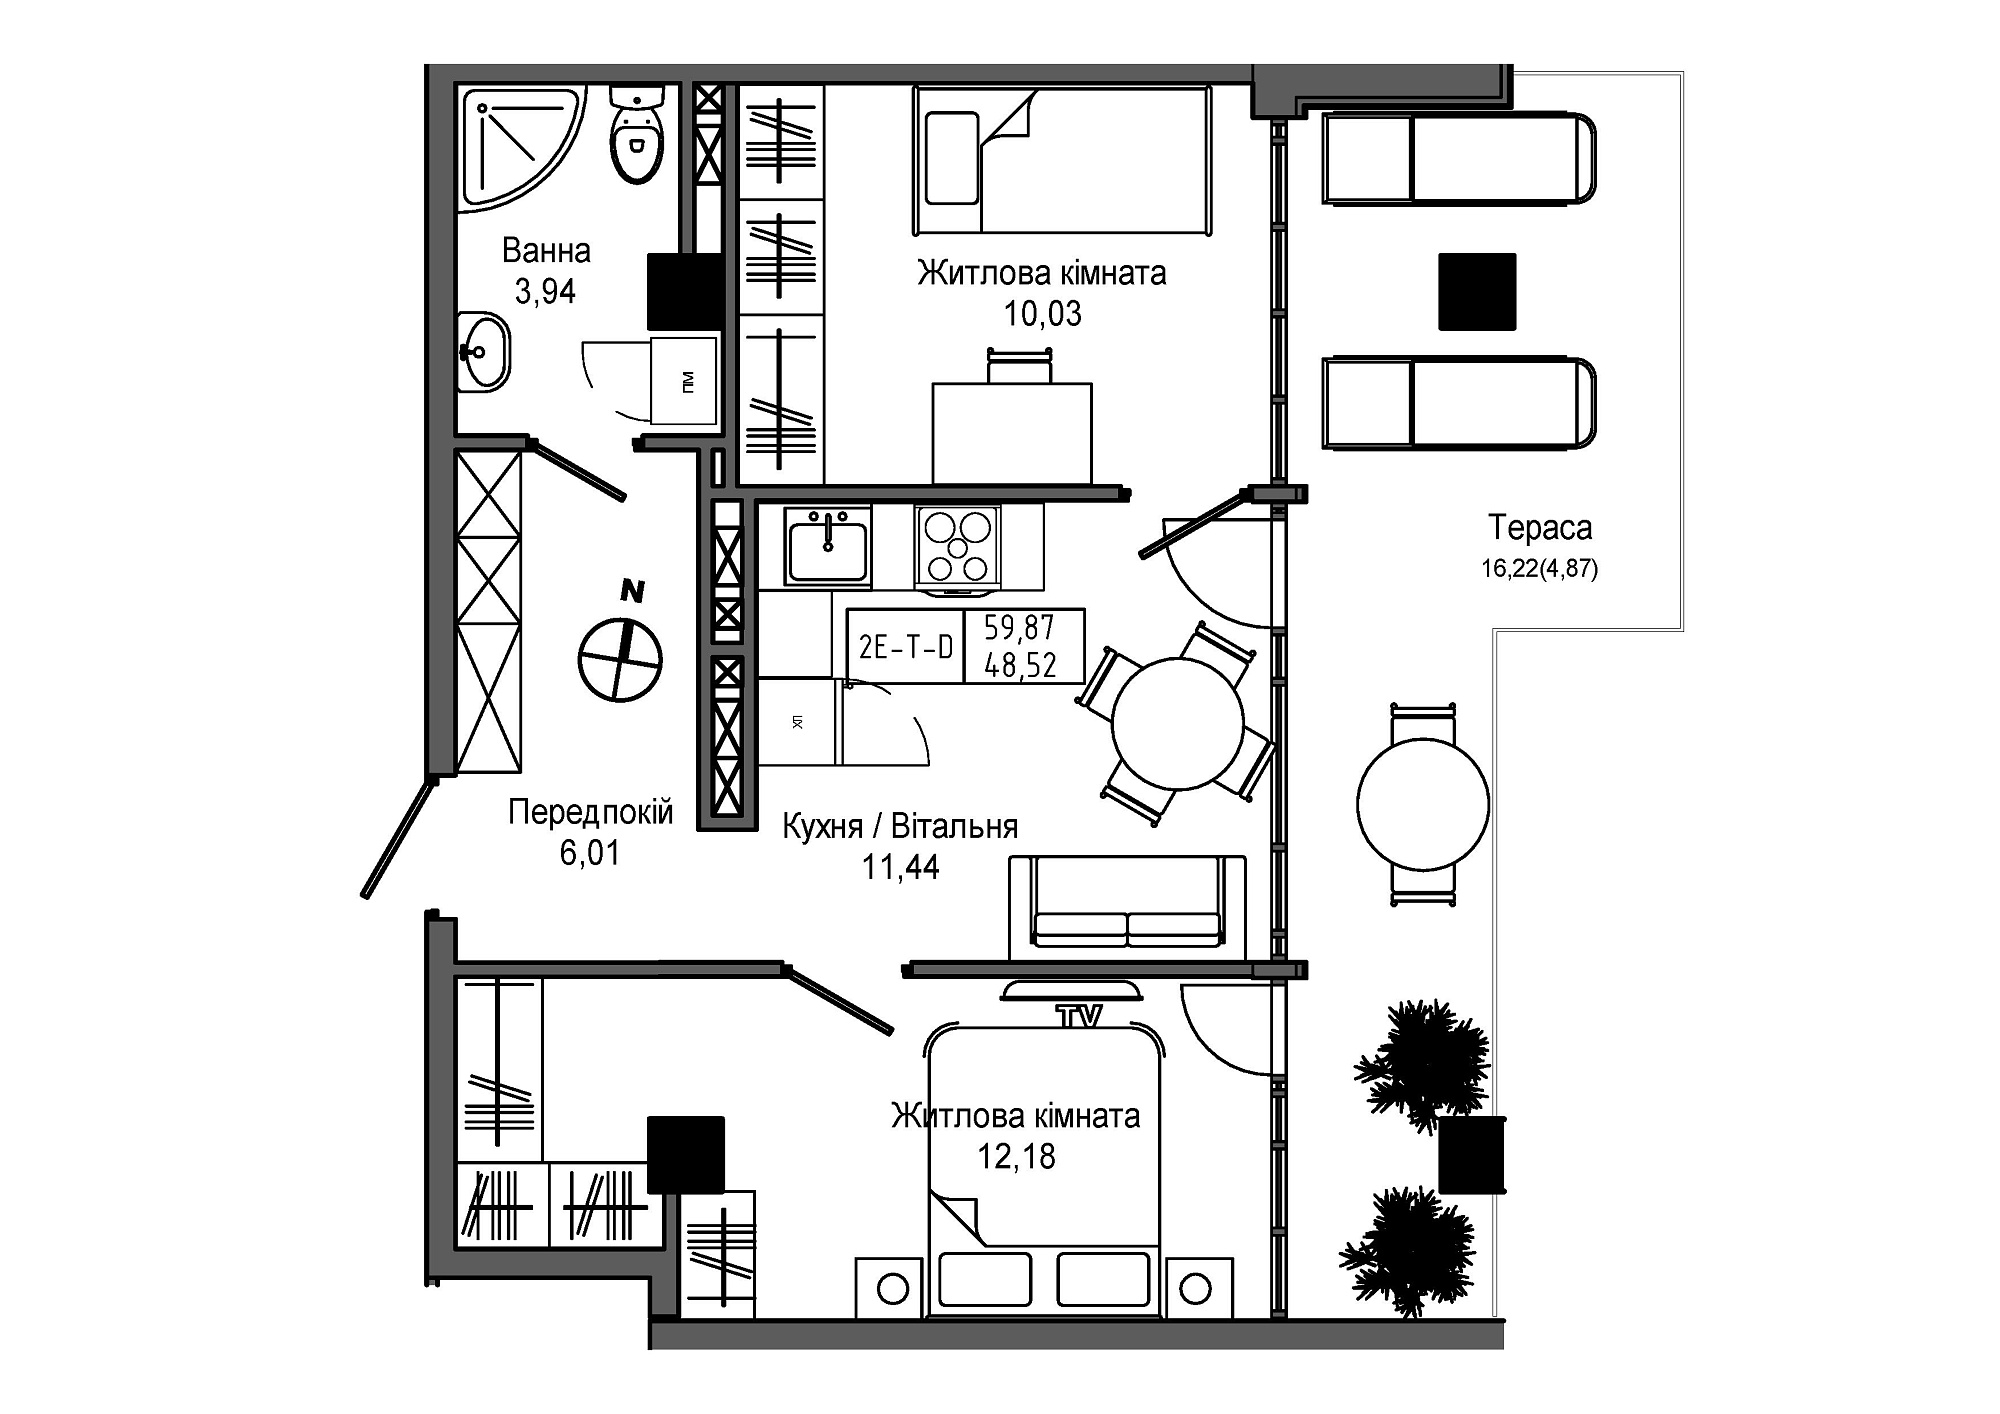 Planning 2-rm flats area 48.52m2, UM-006-08/0023.